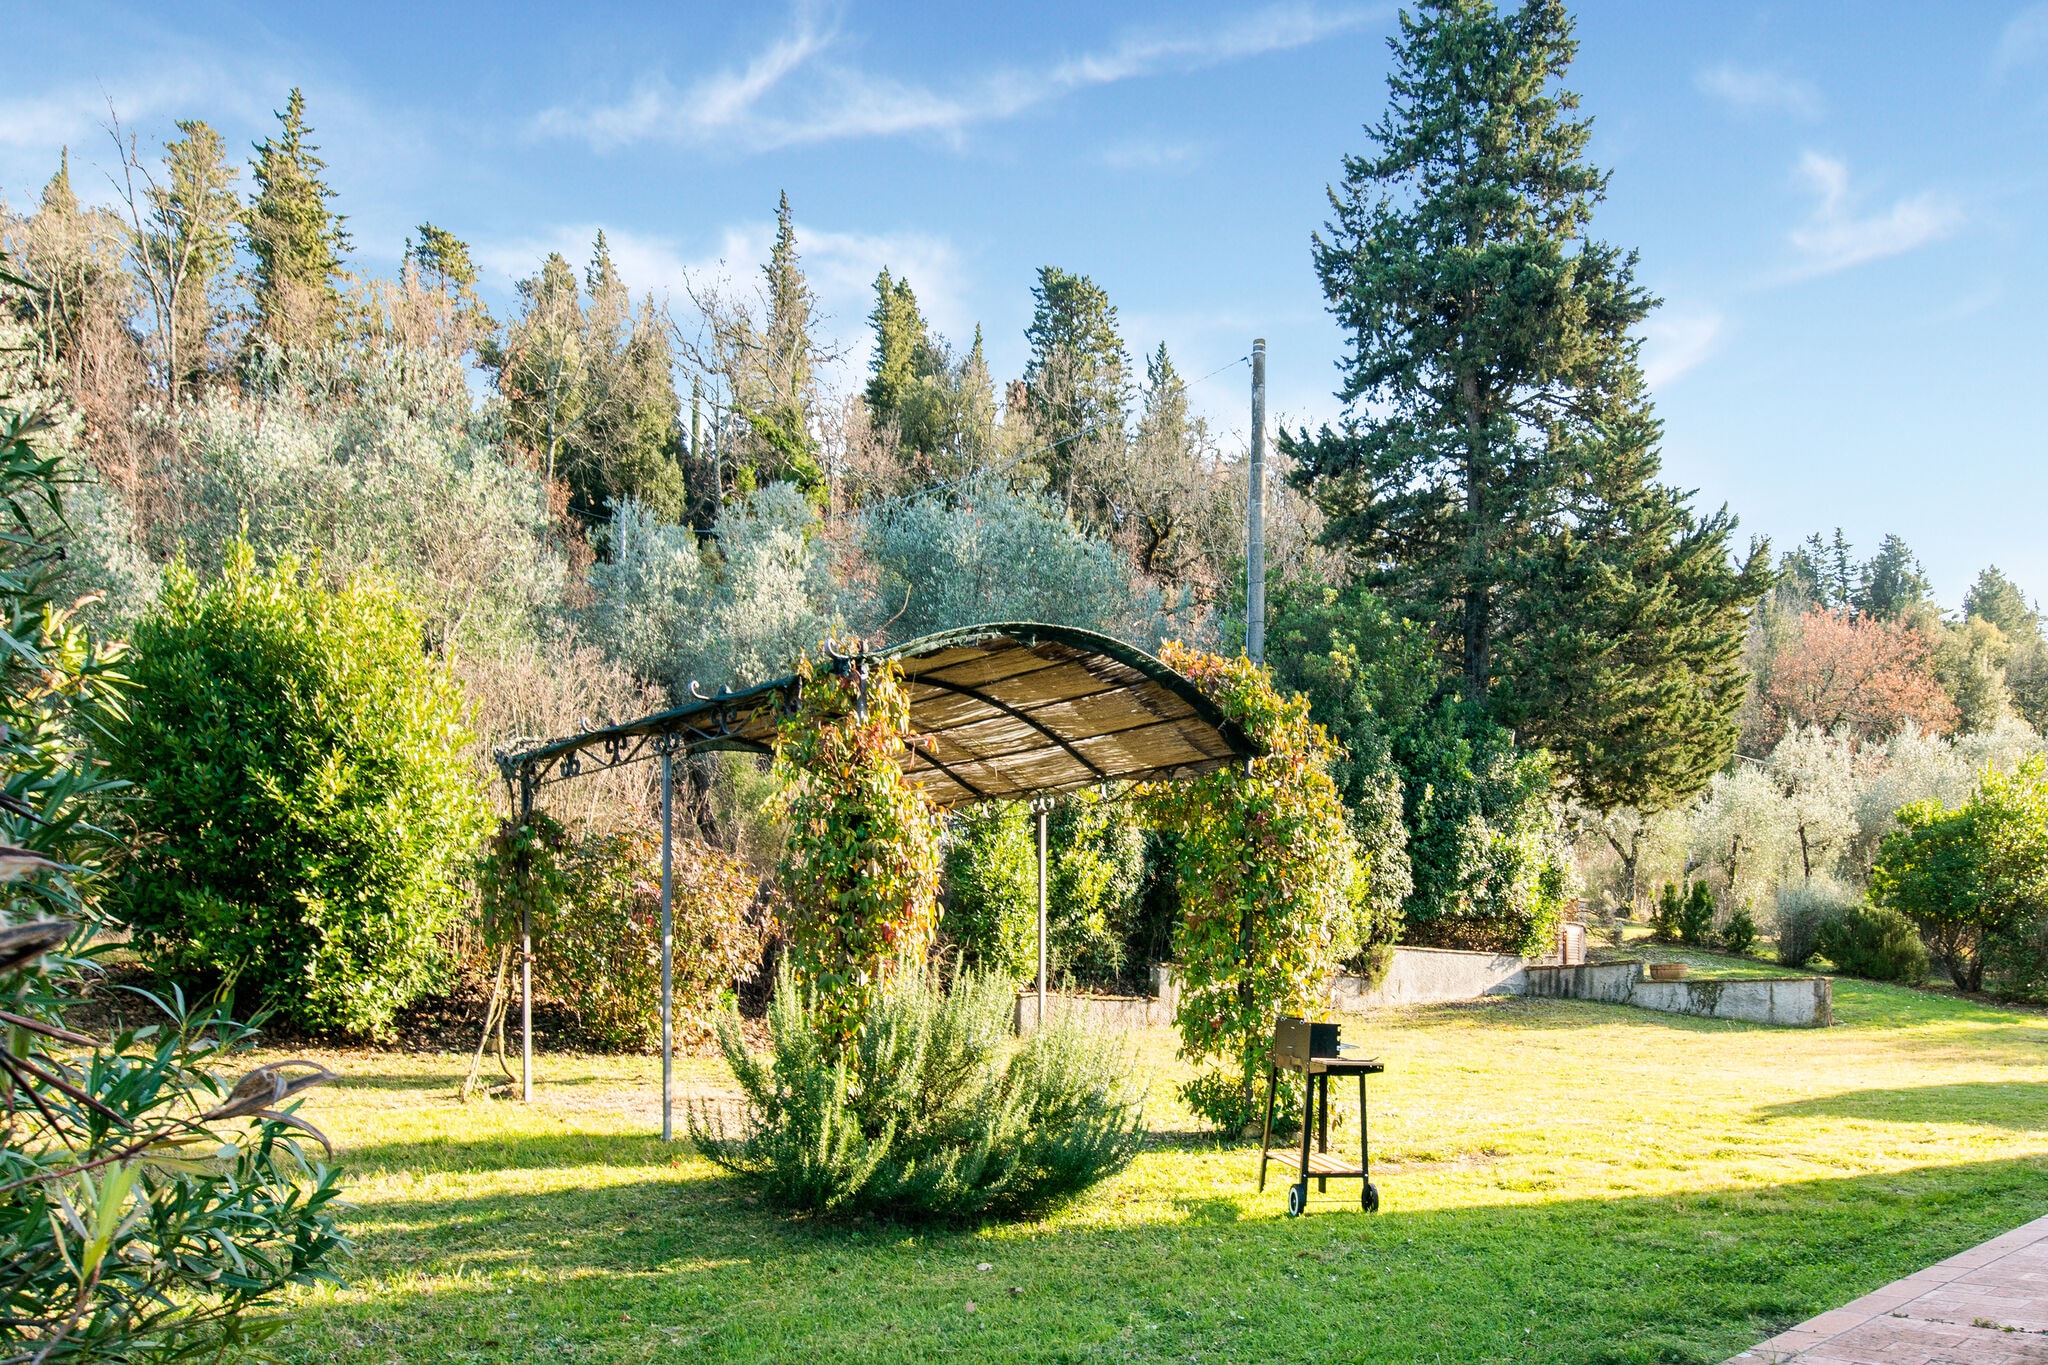 Villa San Casciano in Val di Pesa, située dans les collines de Toscane.